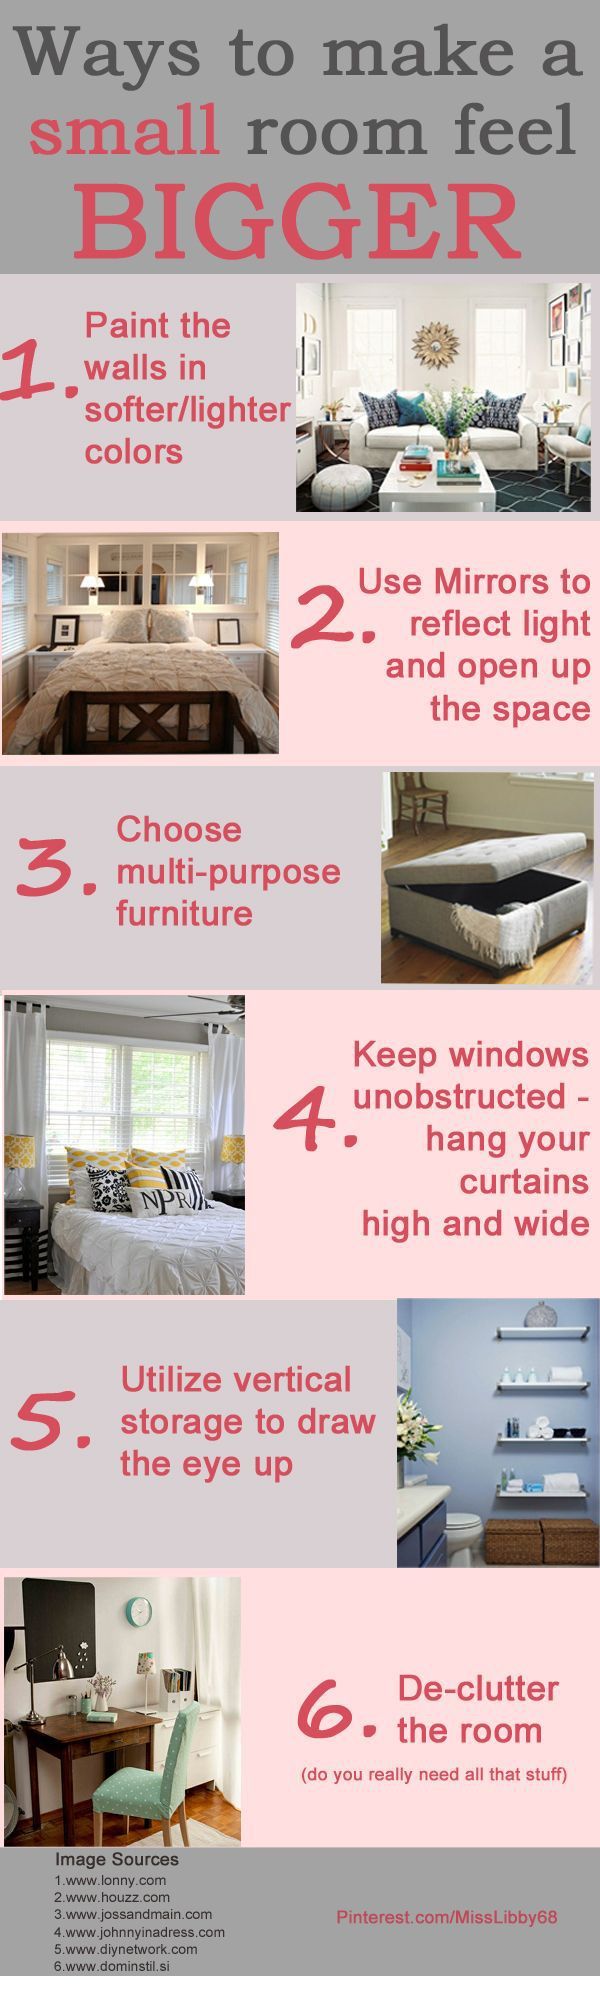 bedroomorganizationtips10